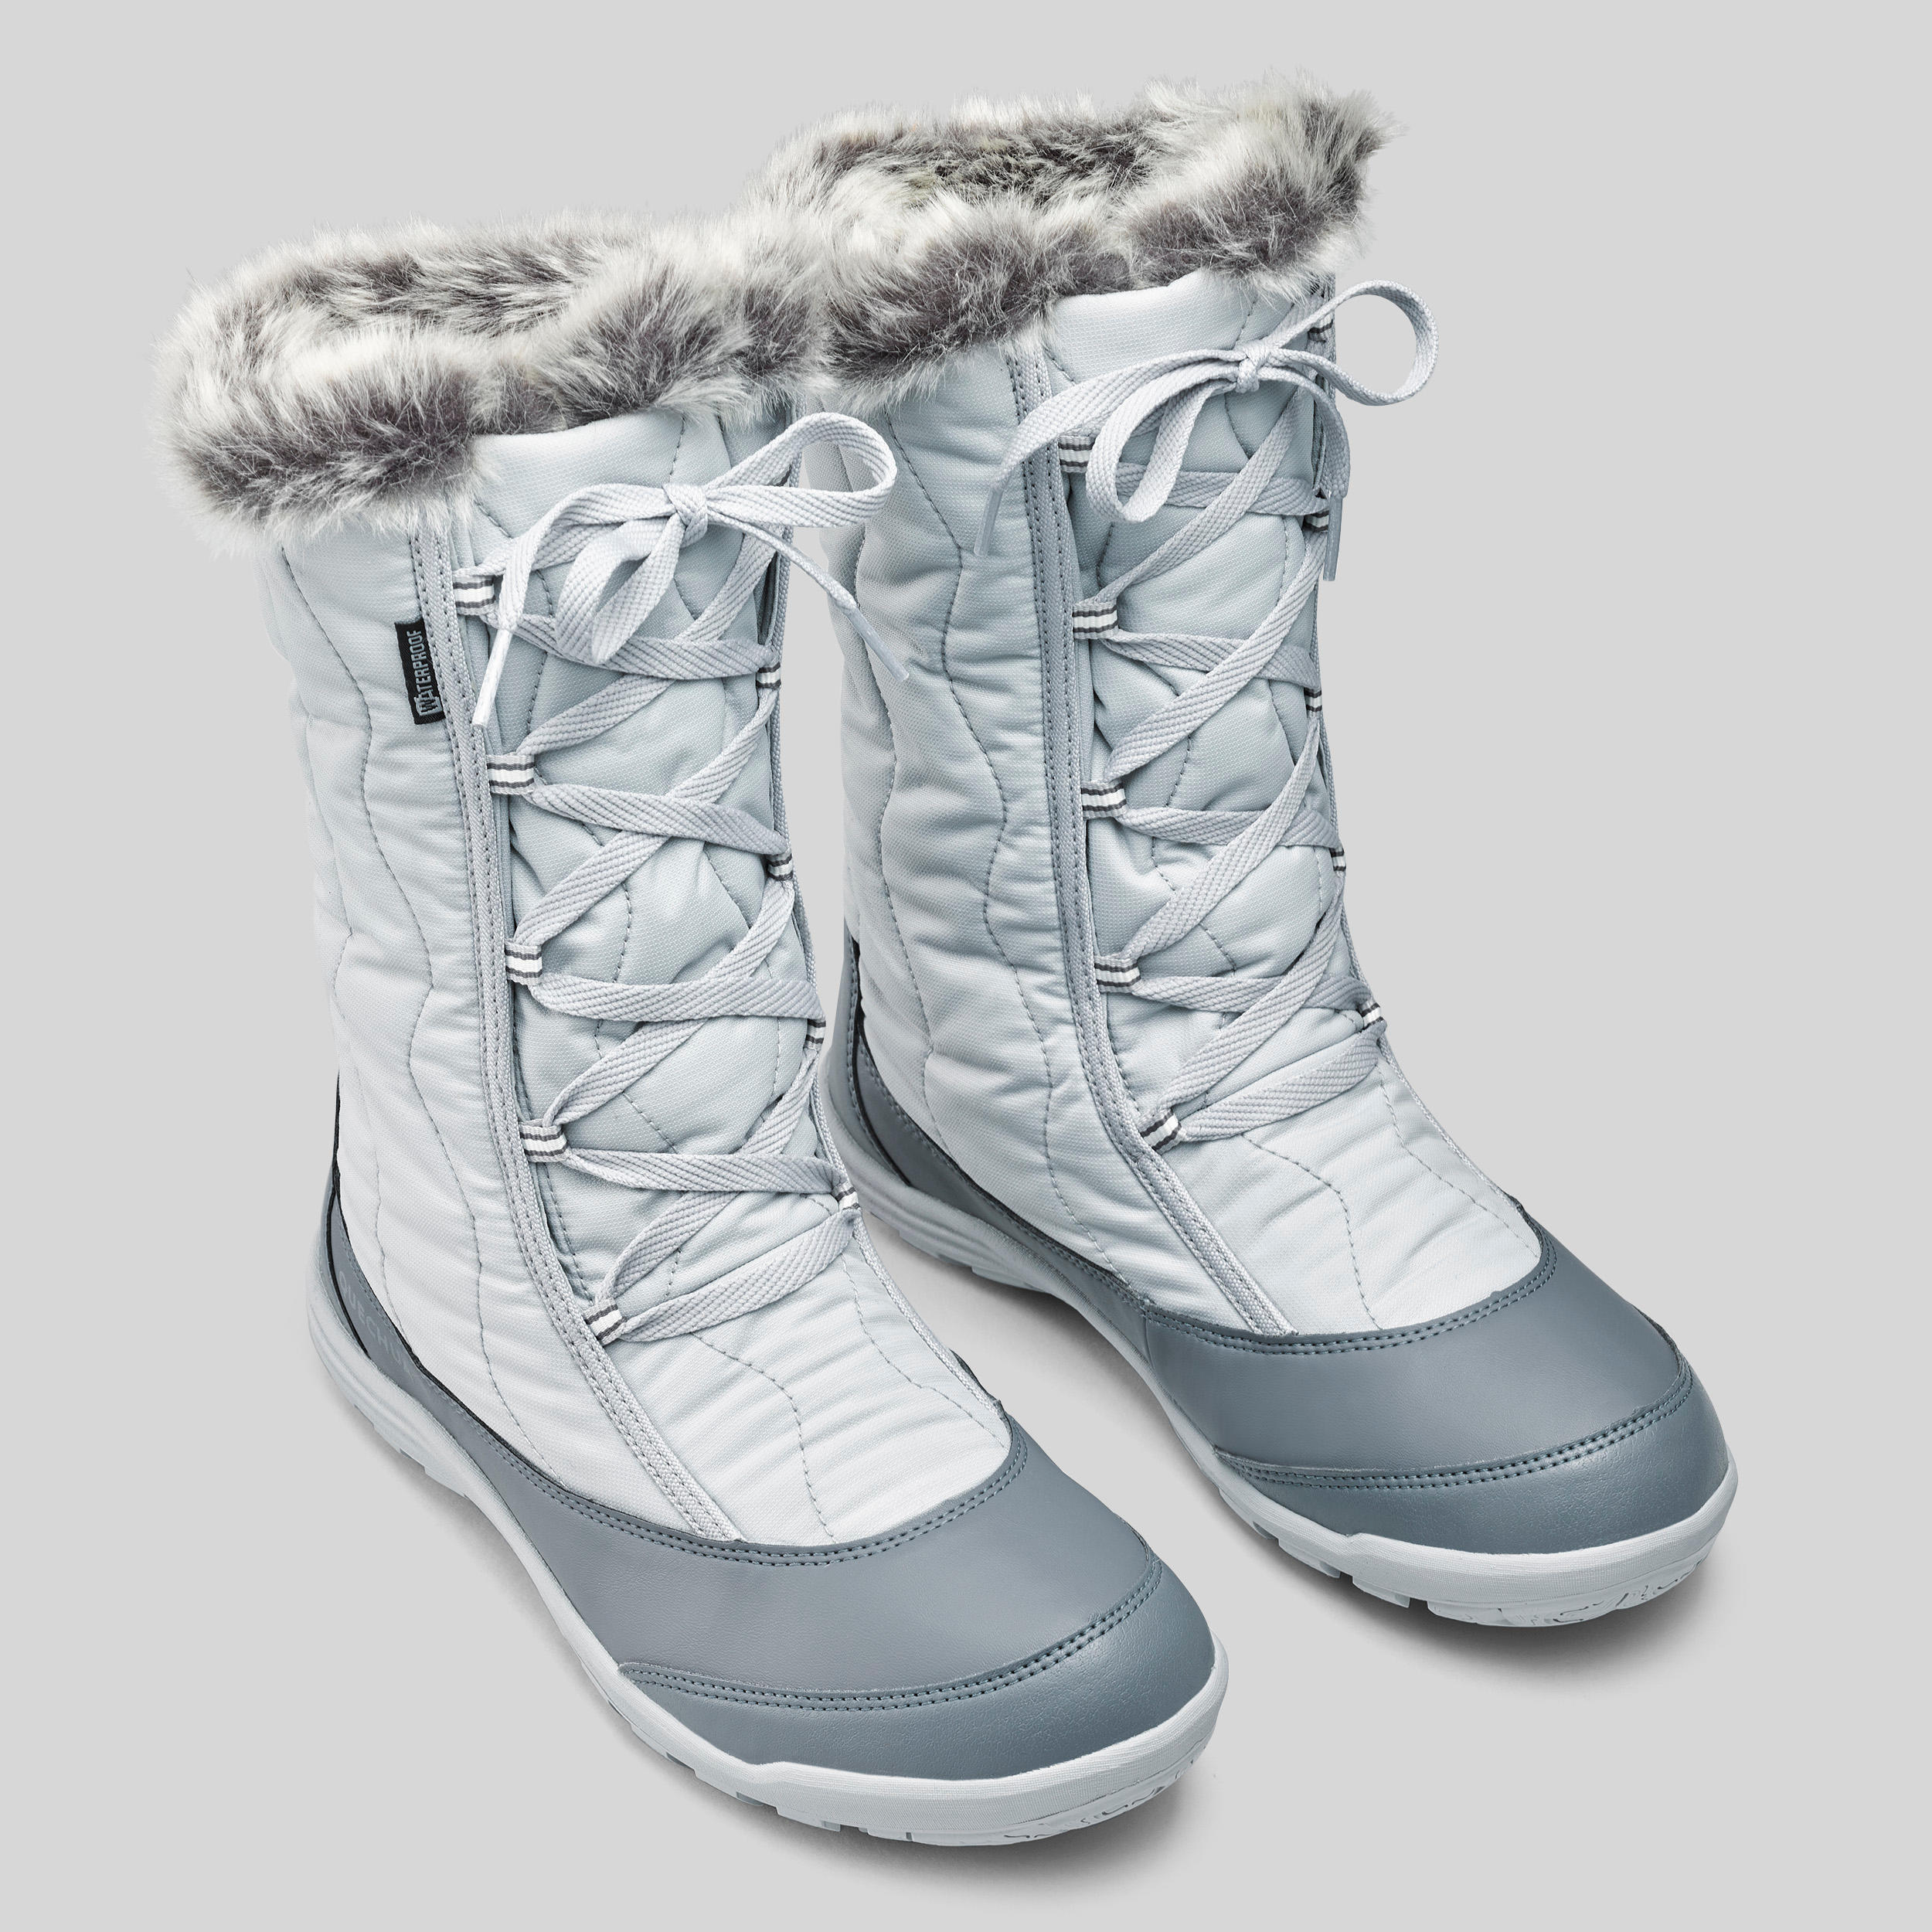 Women's Warm Waterproof Snow Lace-Up Boots - SH500 X-WARM 4/6